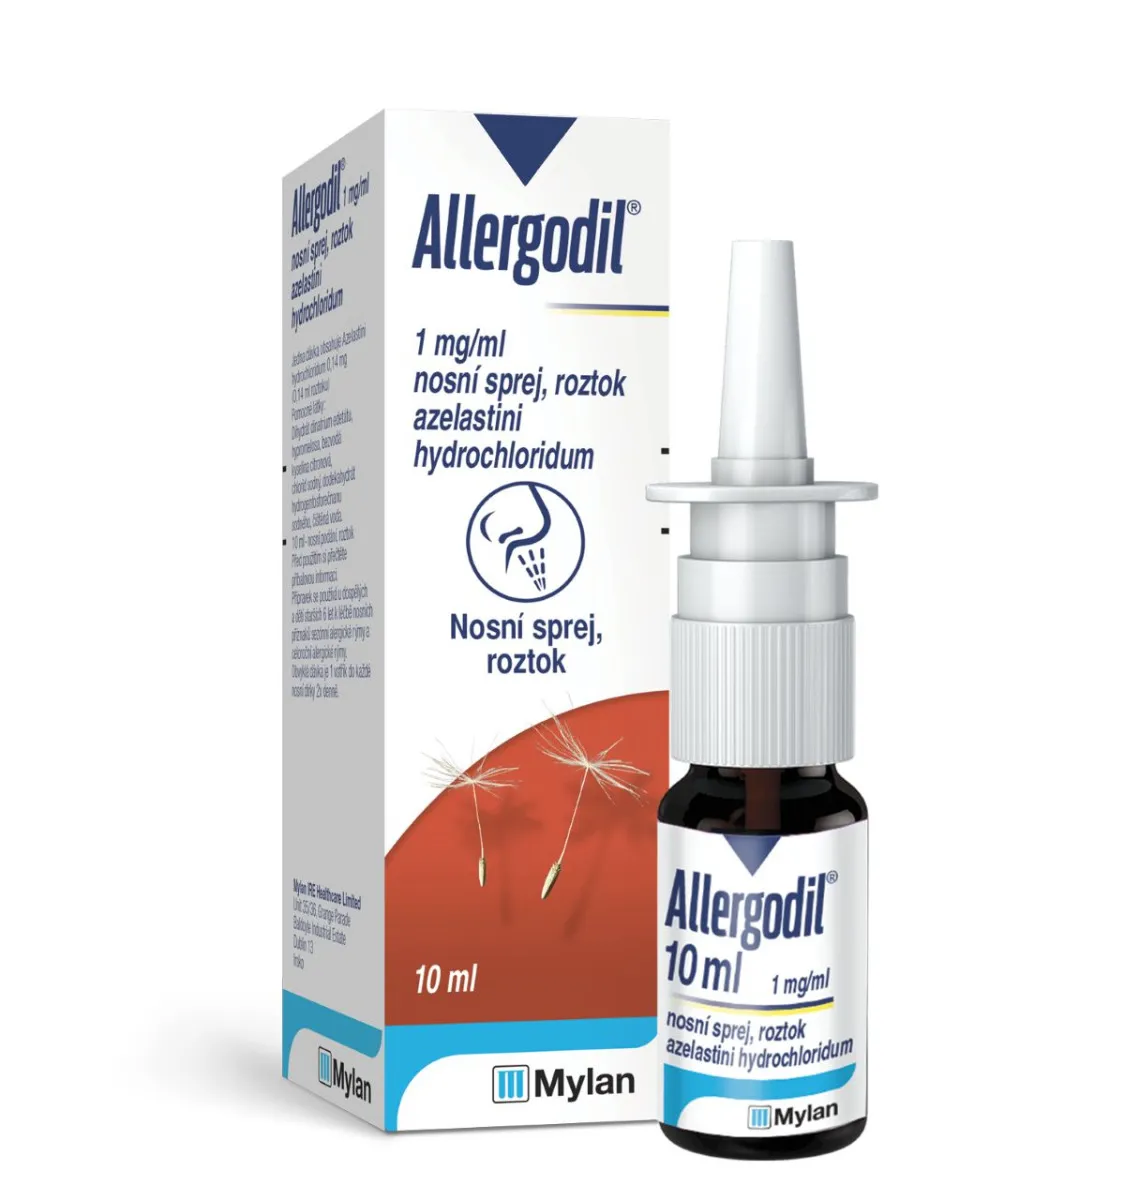 Allergodil 1 mg/ml nosní sprej 10 ml